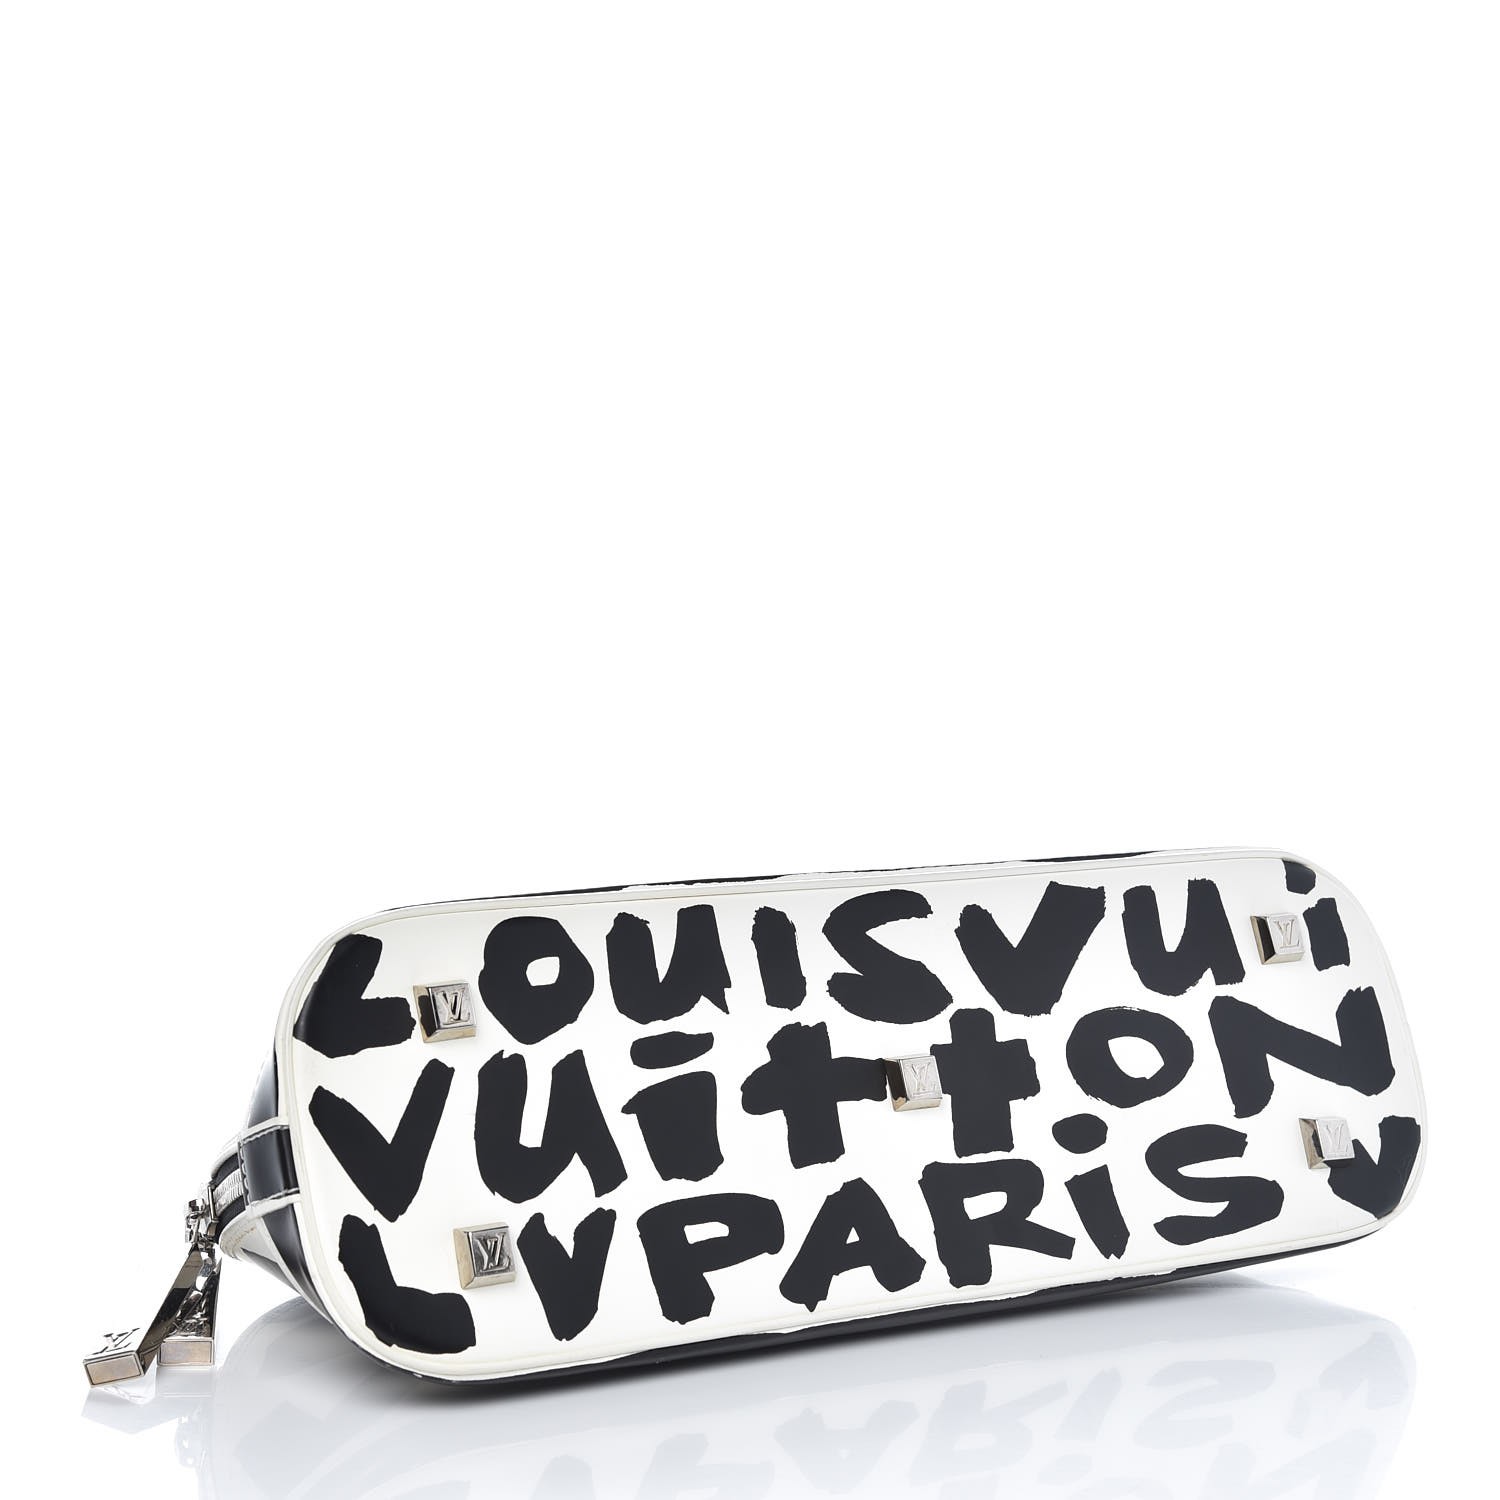 Louis Vuitton Graffiti  Natural Resource Department